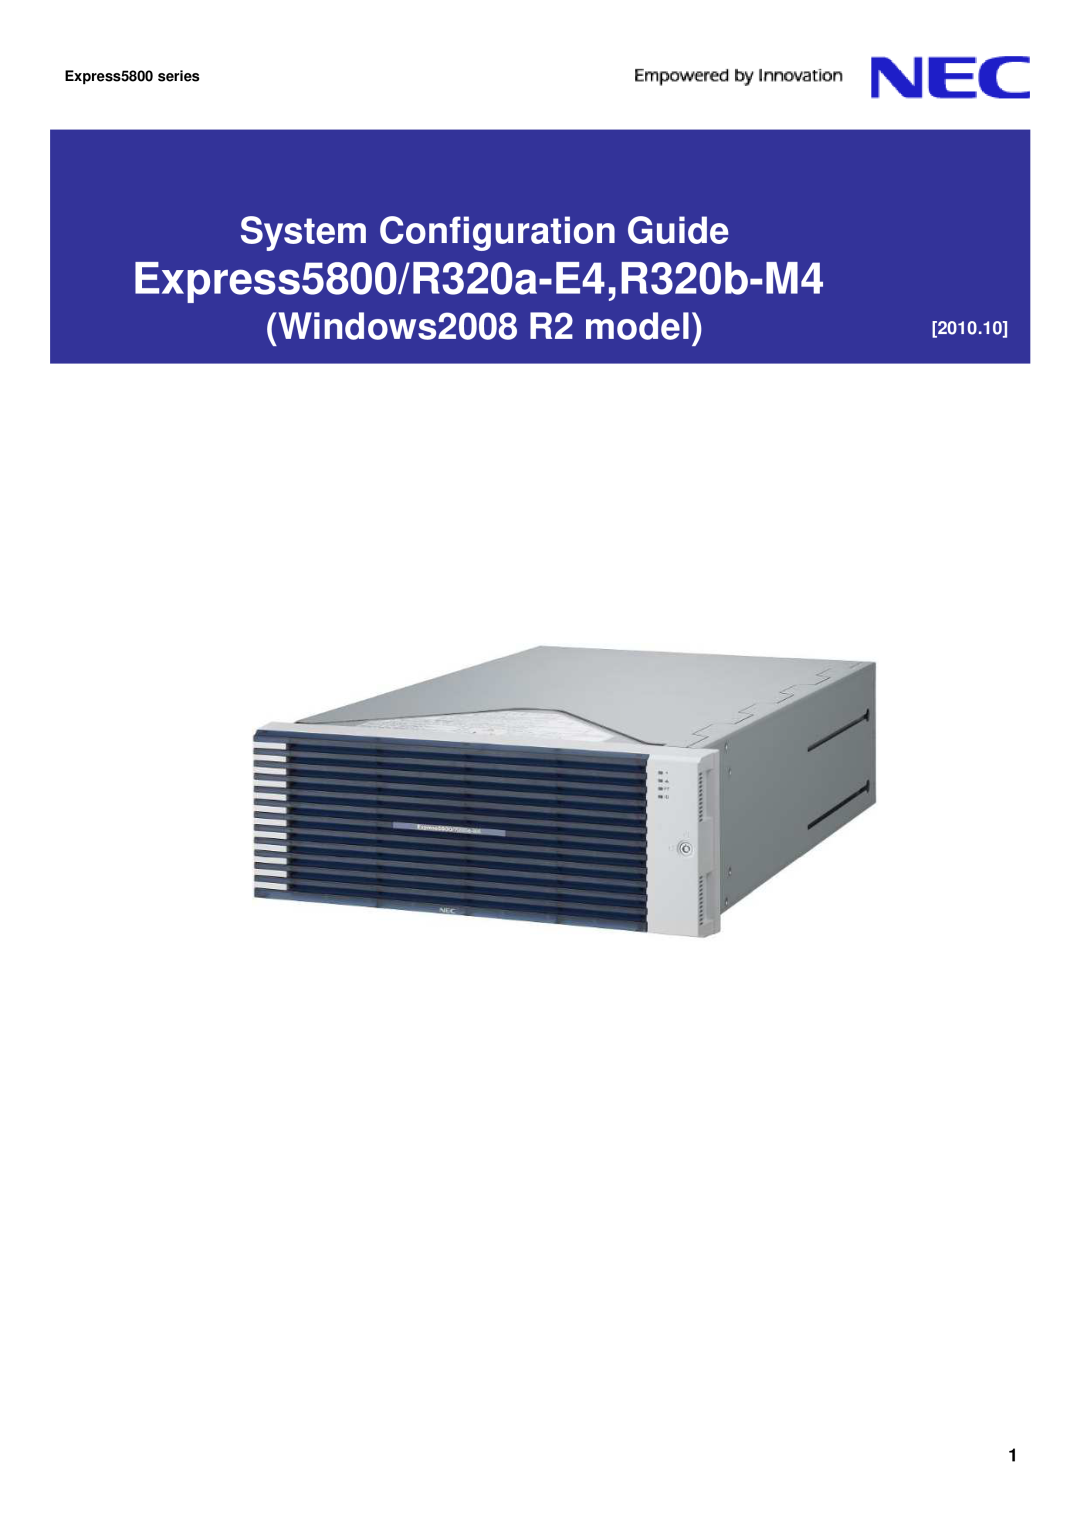 NEC R320A-E4 manual SCG300-10-001, System Configuration Guide, NEC Express5800/ft series, Model R320a-E4/M4 VMware, August 